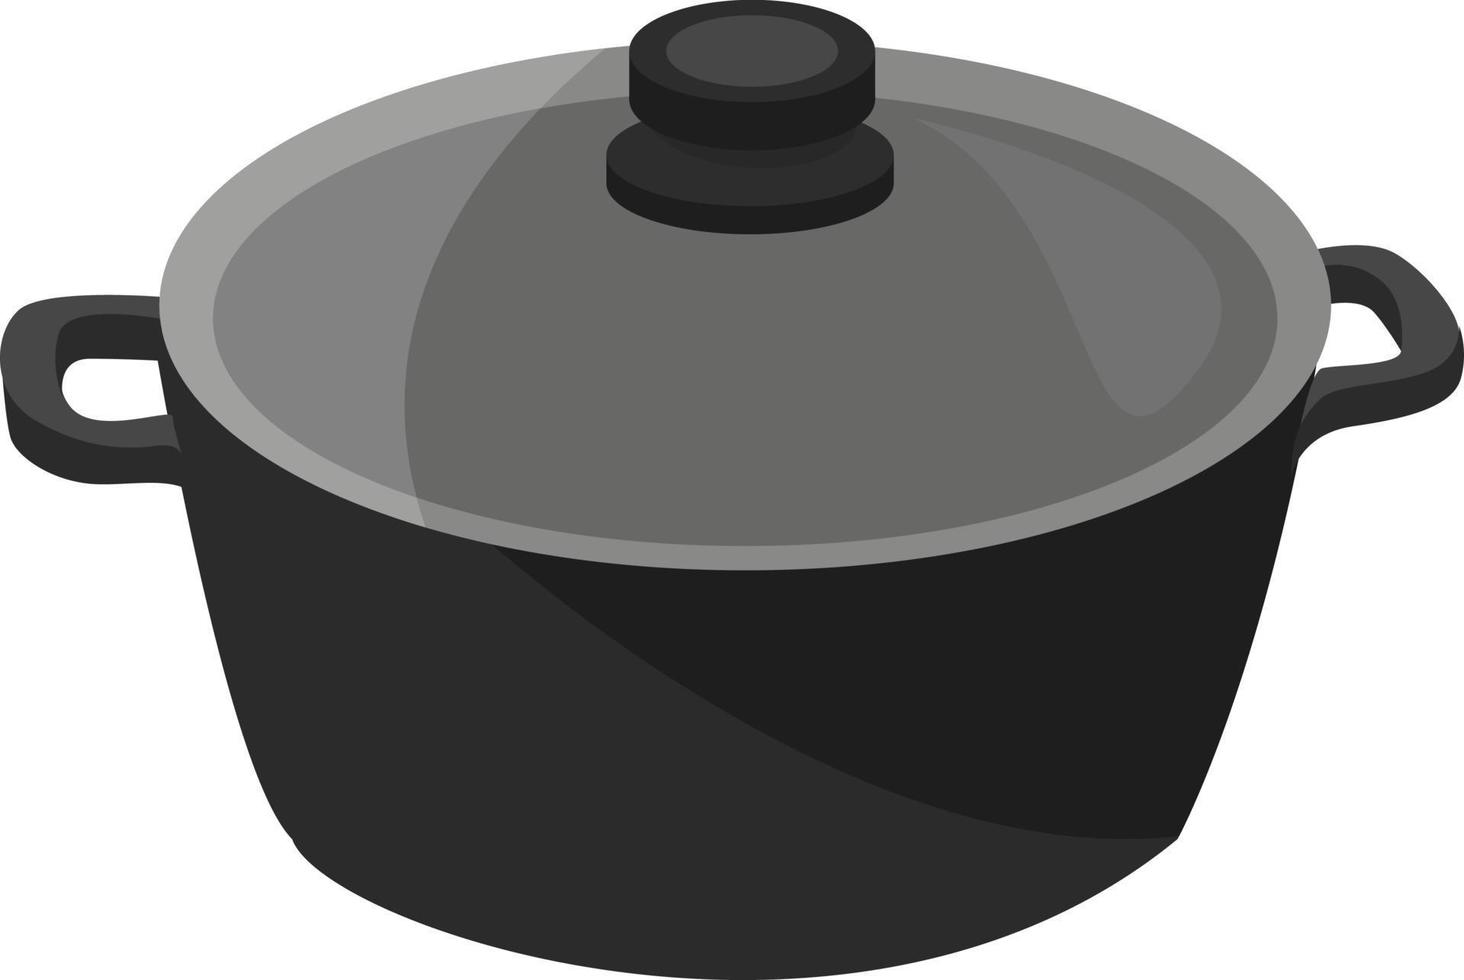 Black pan, illustration, vector on white background